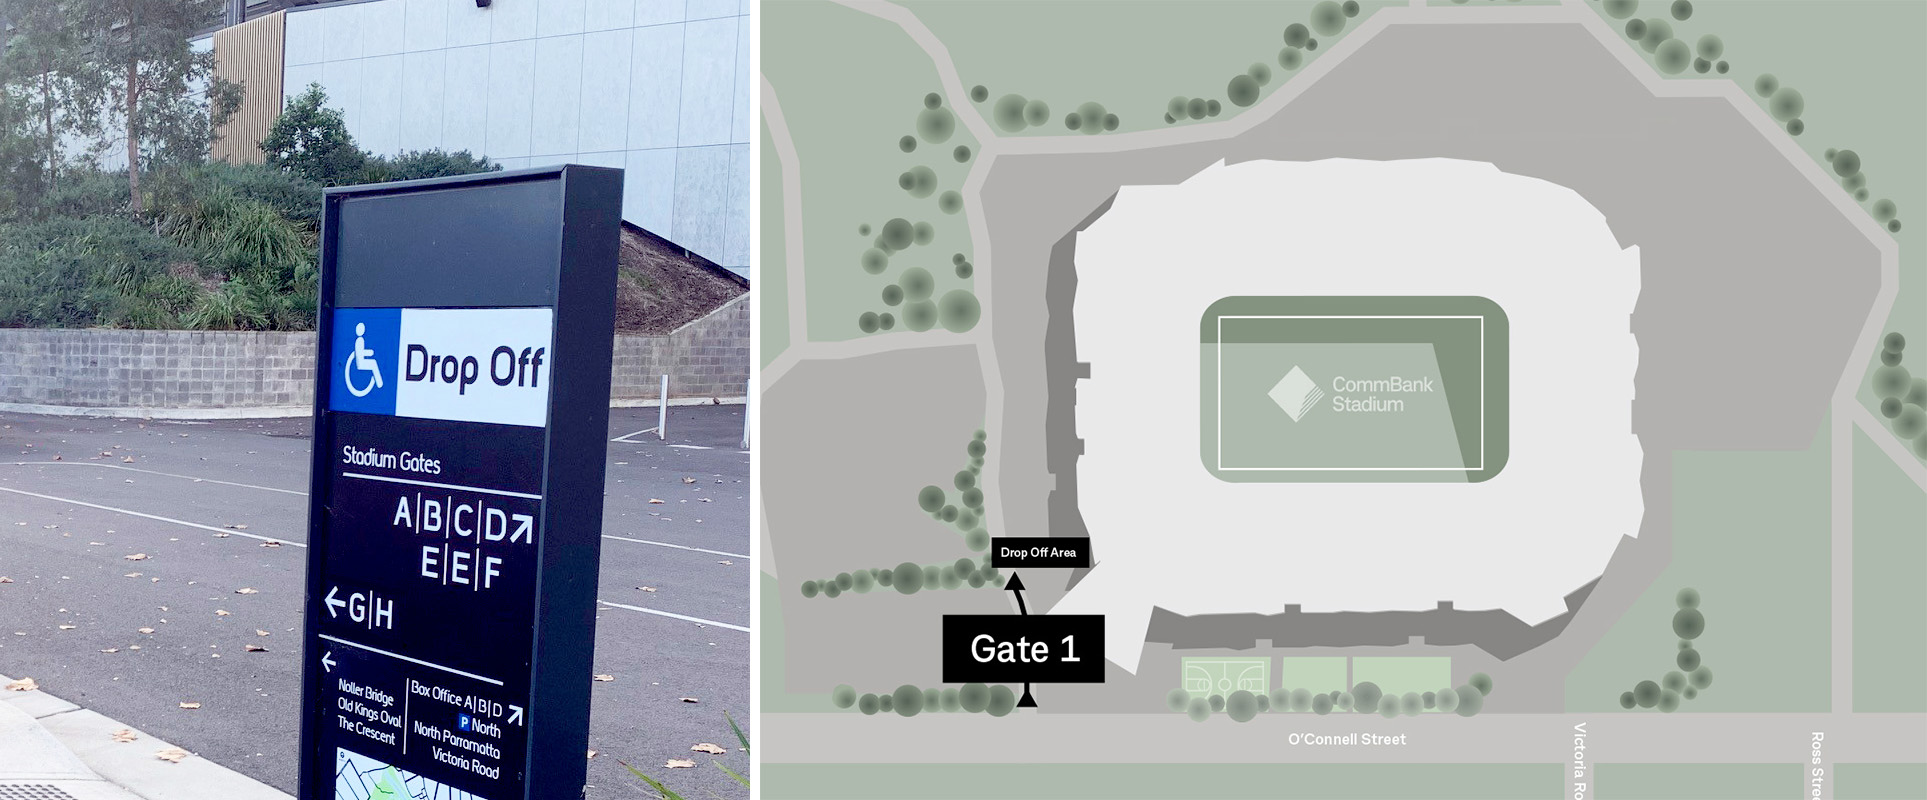 CommBank Stadium Accessible Drop Off Area